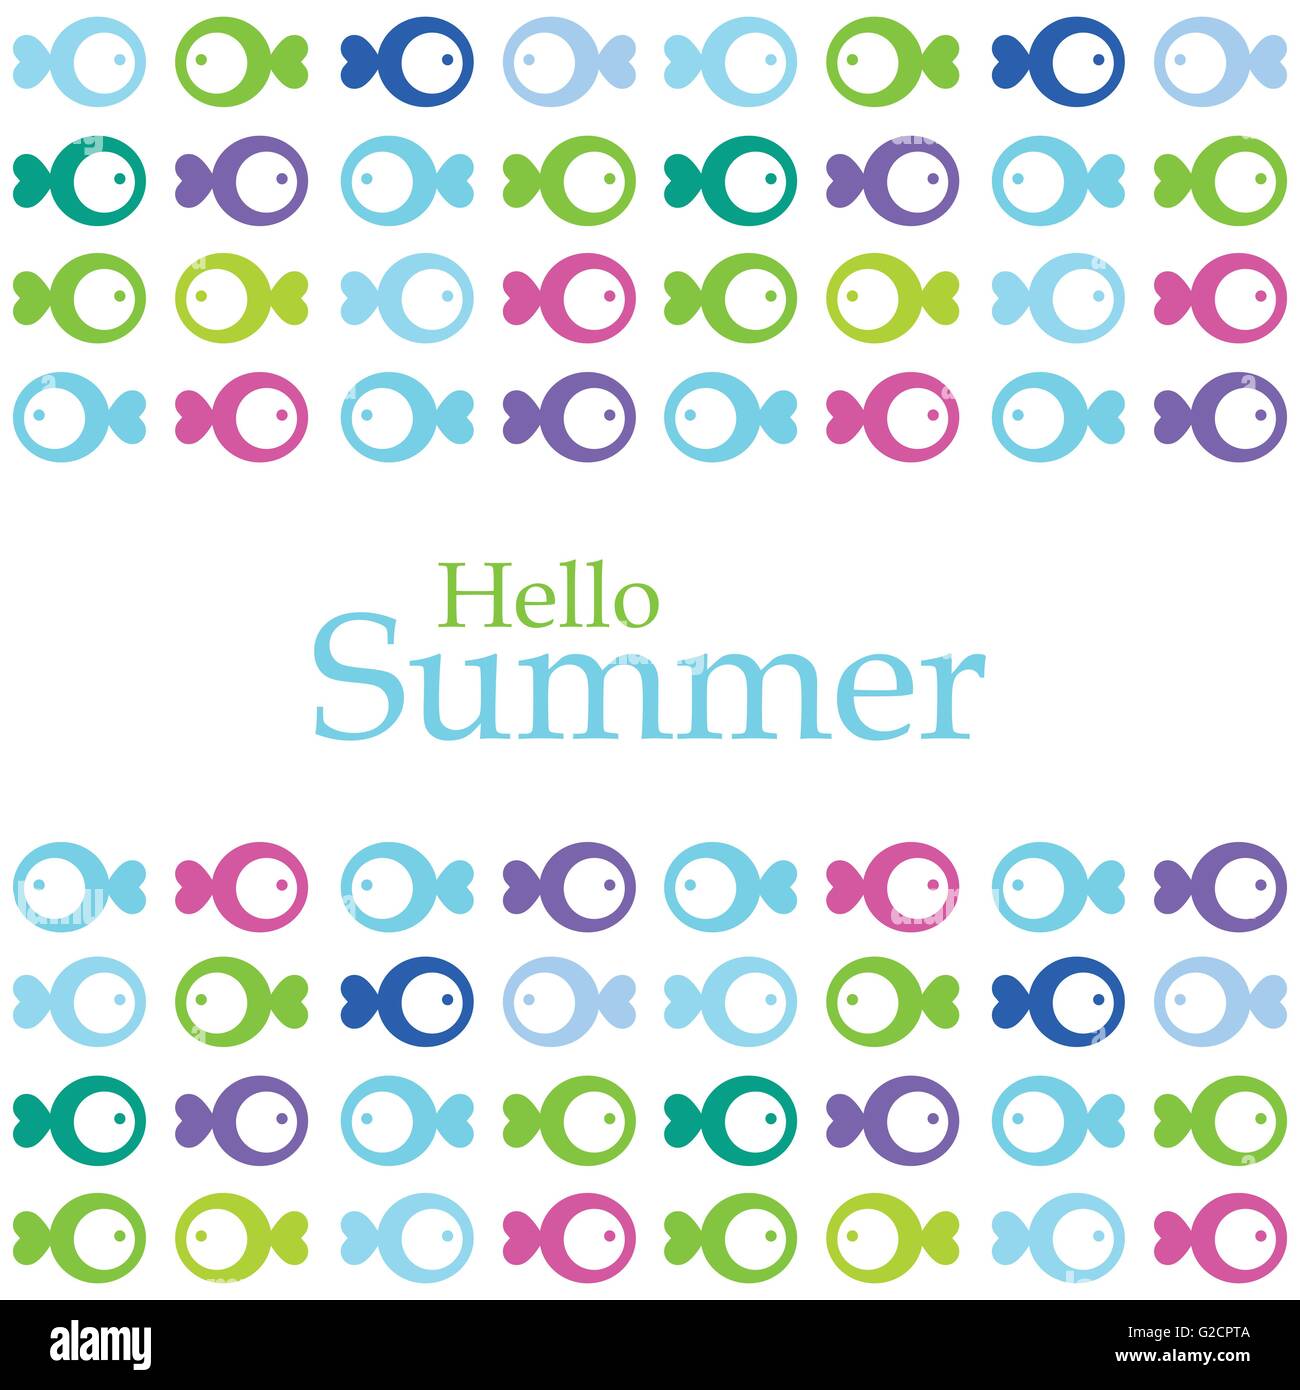 Hello summer - design element - background Stock Vector